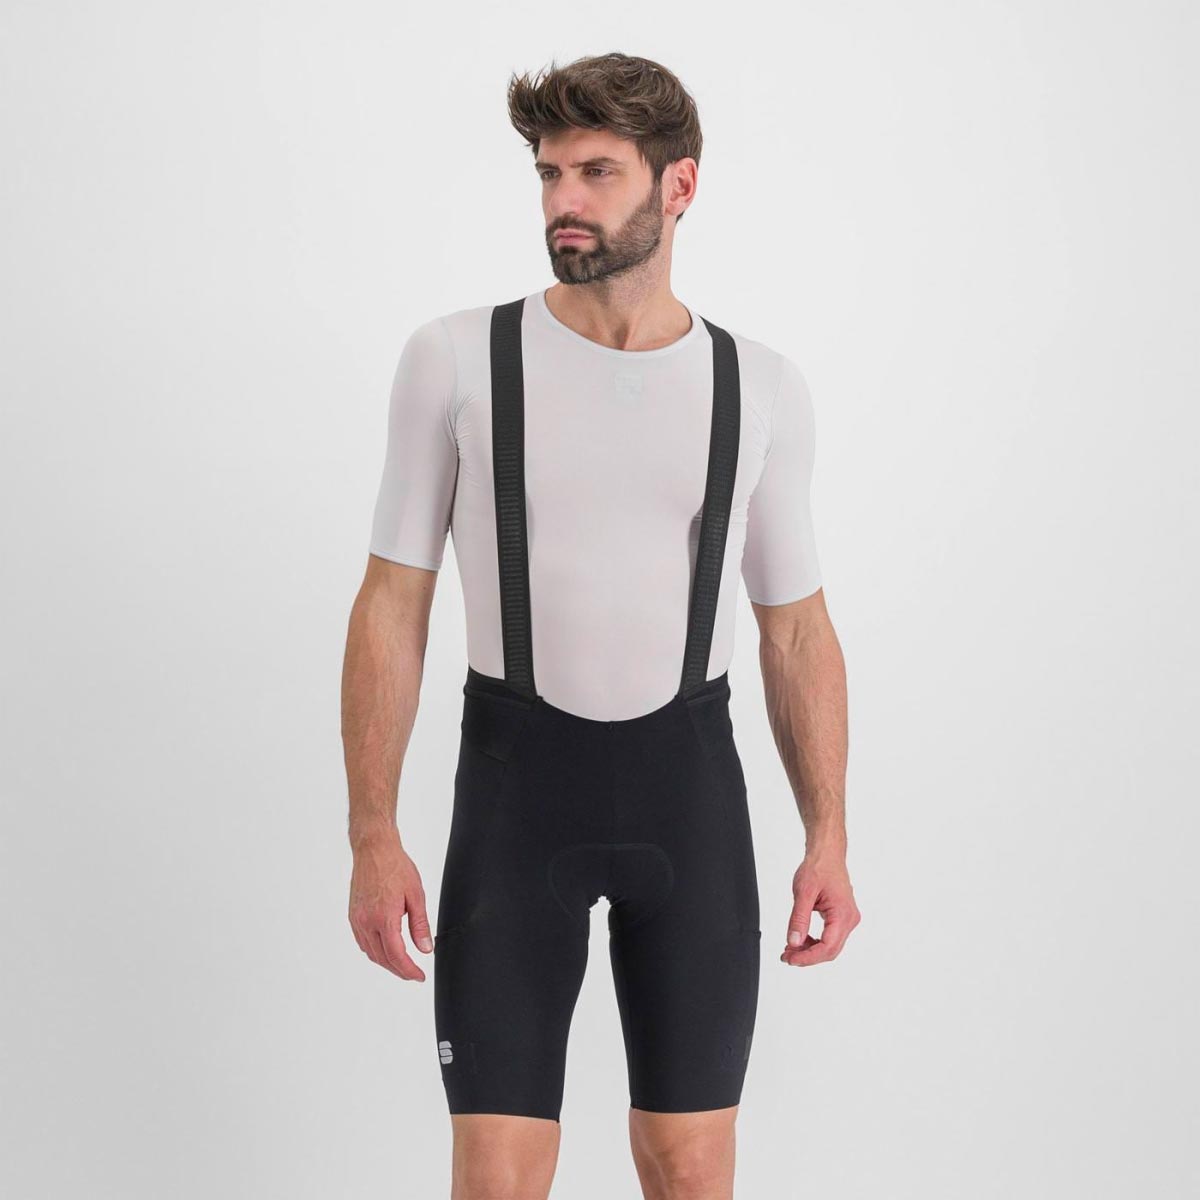 Sportful Ultra, un culotte con bolsillos ideal para gravel, bikepacking y gran fondo